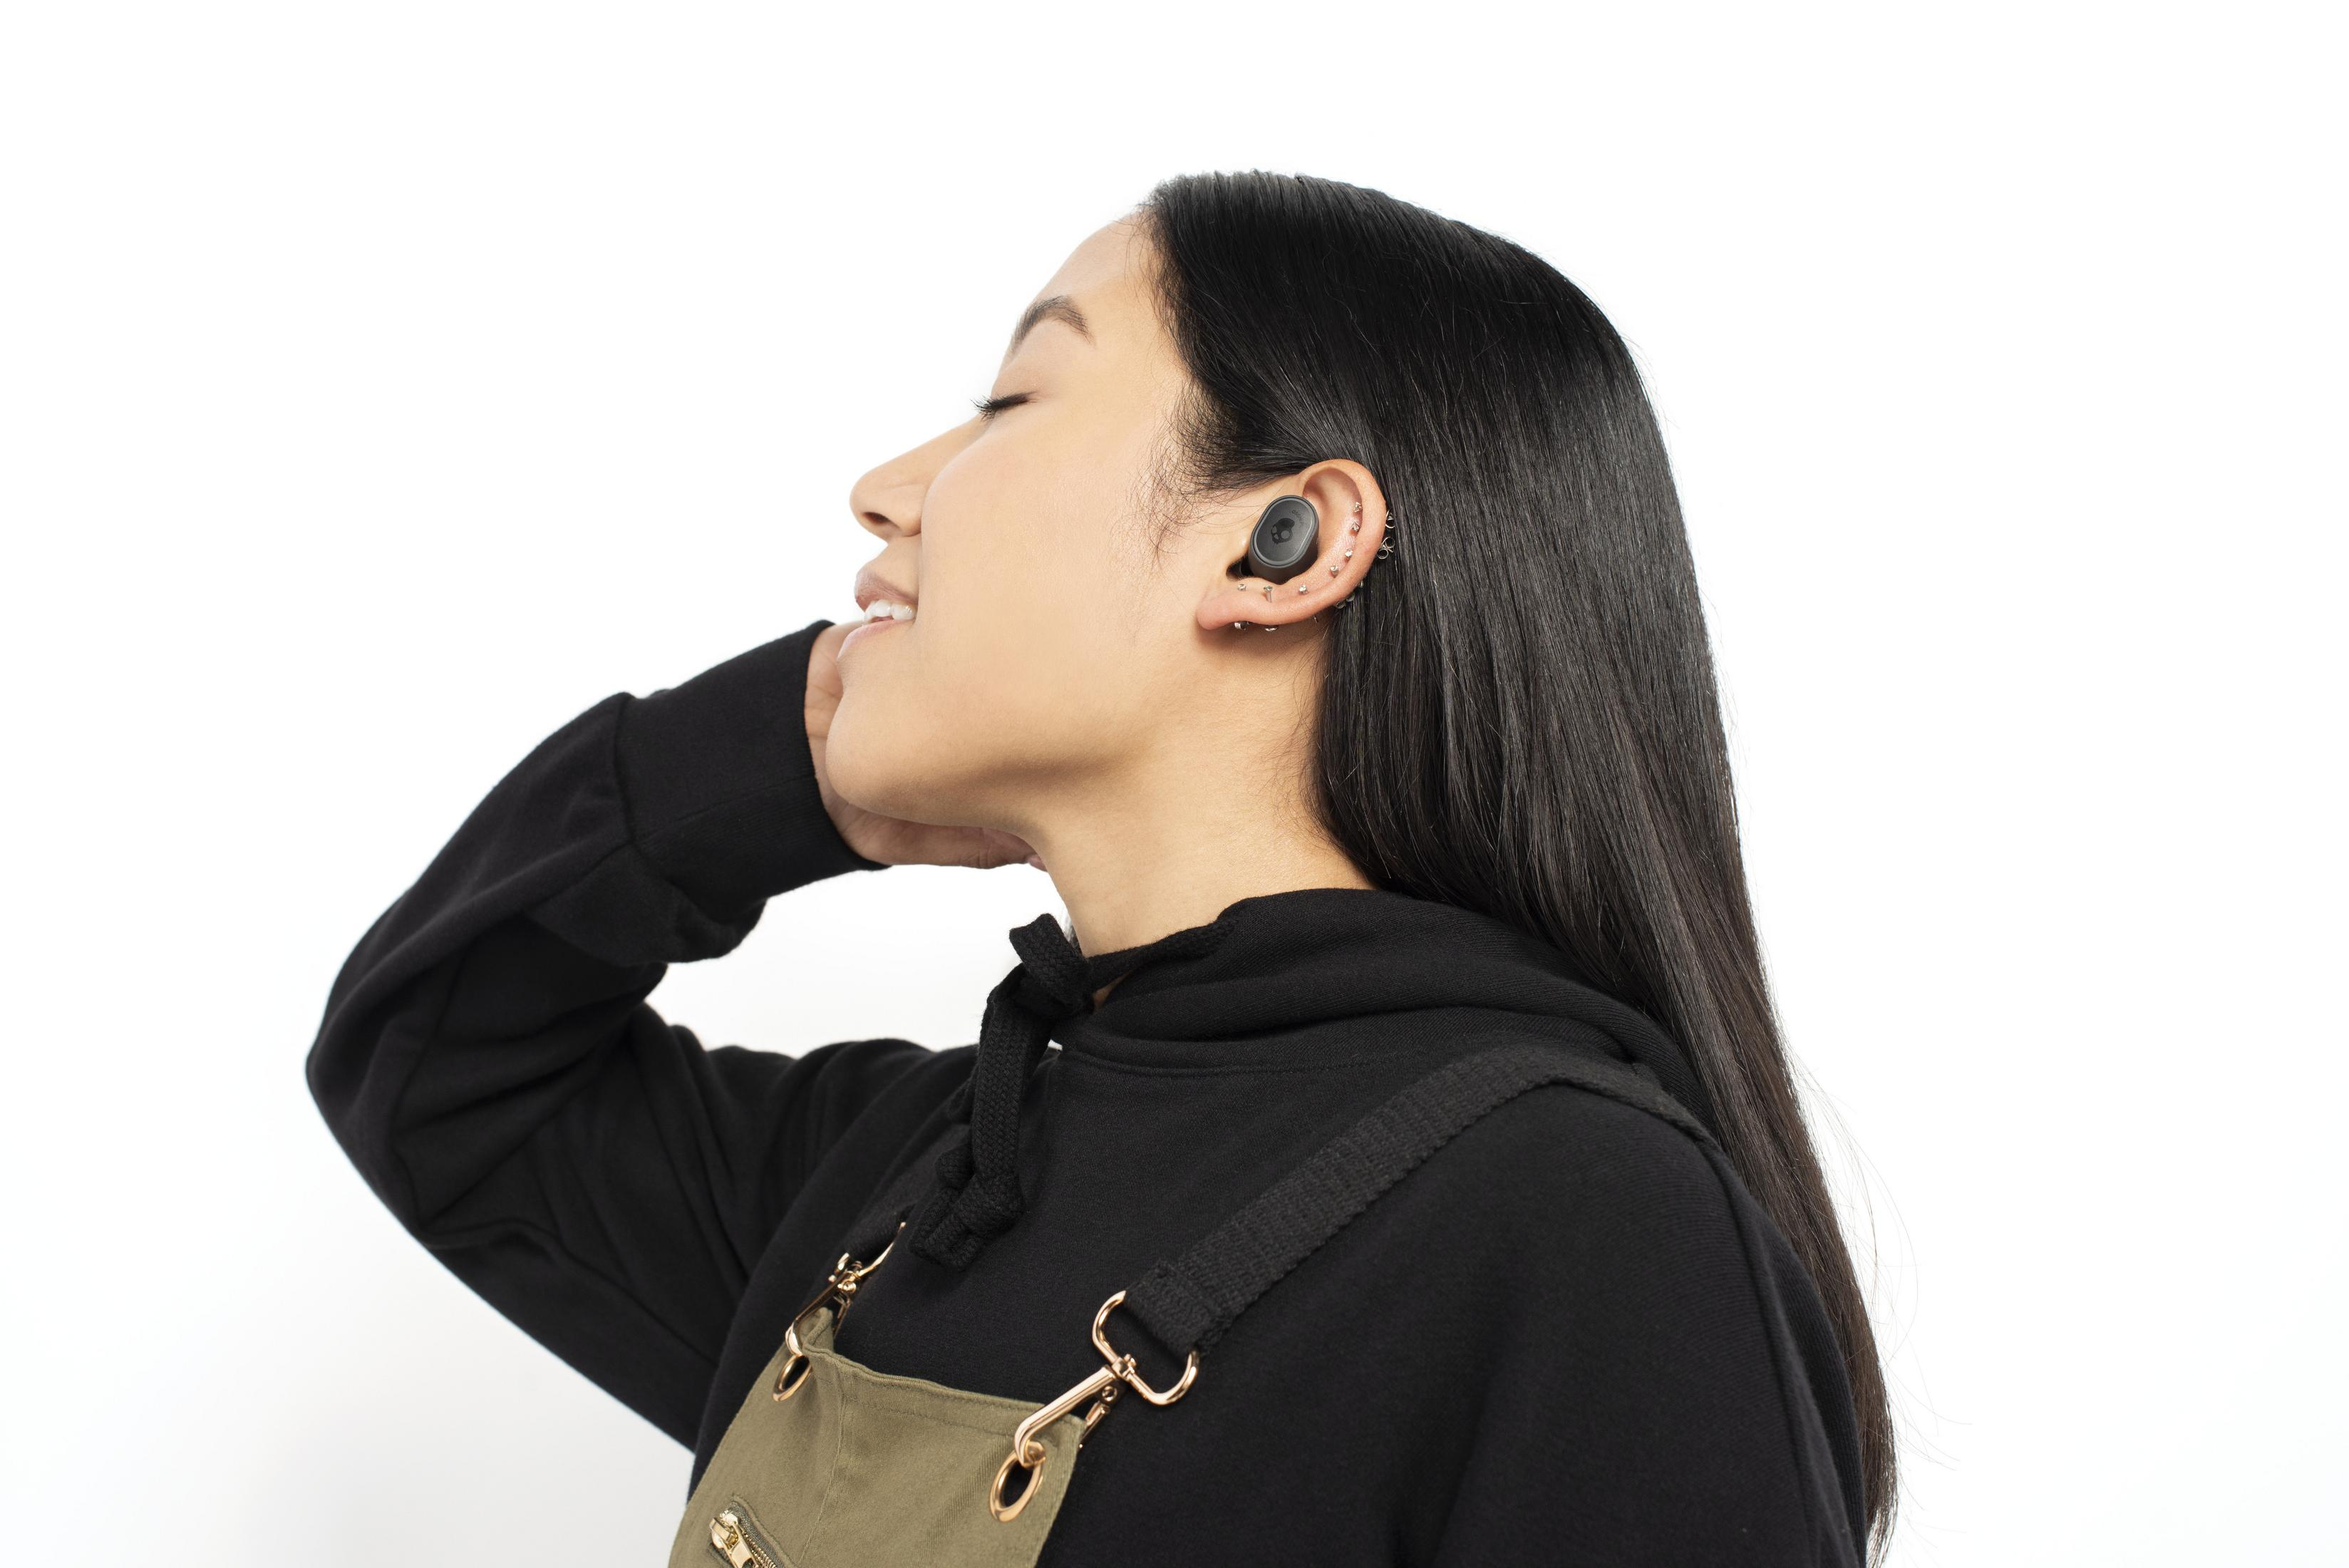 BLACK, In-ear SESH EVO S2TVW-N740 True Bluetooth Black TRUE Kopfhörer TW SKULLCANDY